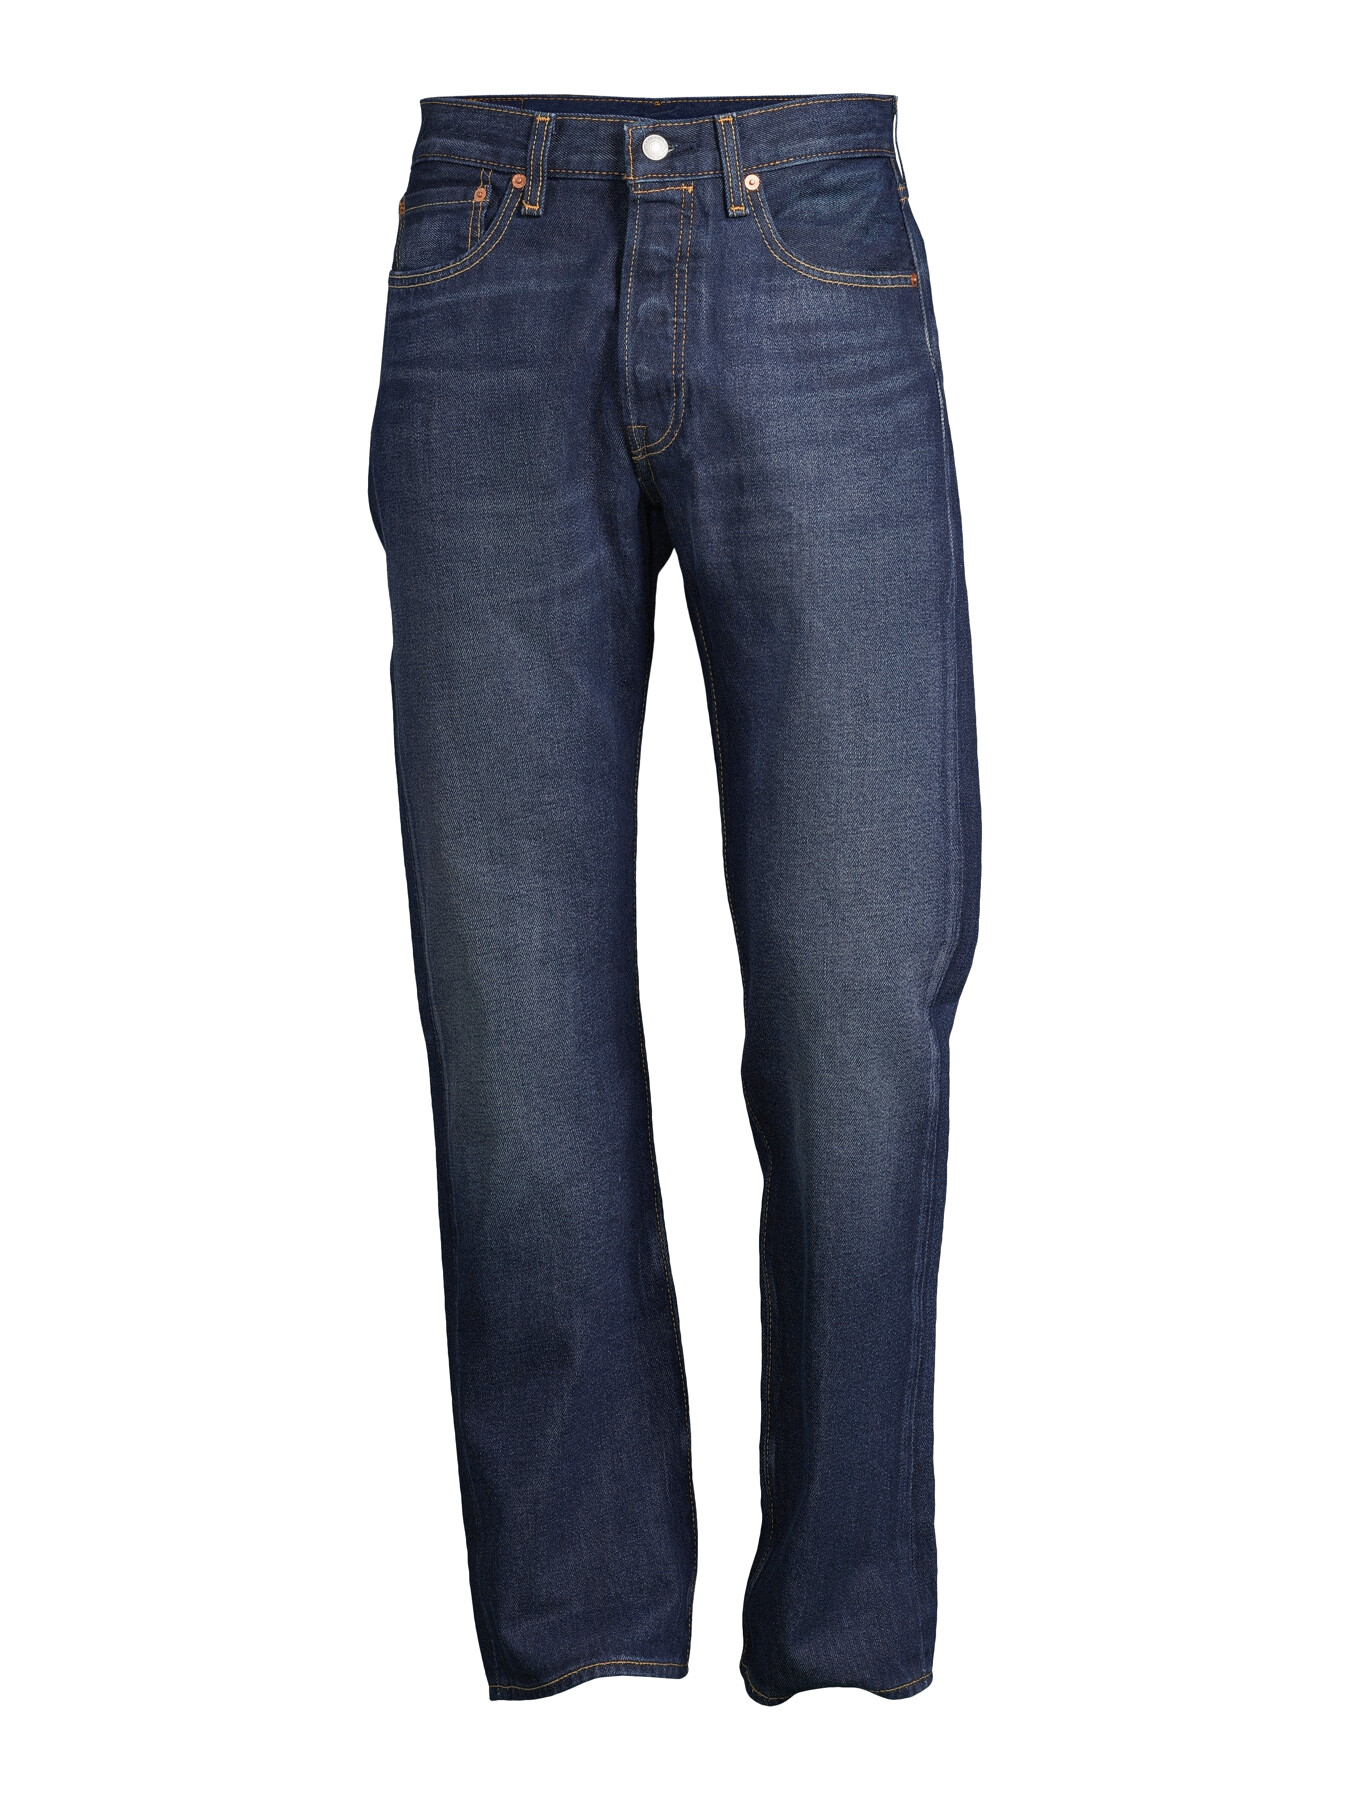 Levi's 501 Original Jeans | Straight | Fenwick